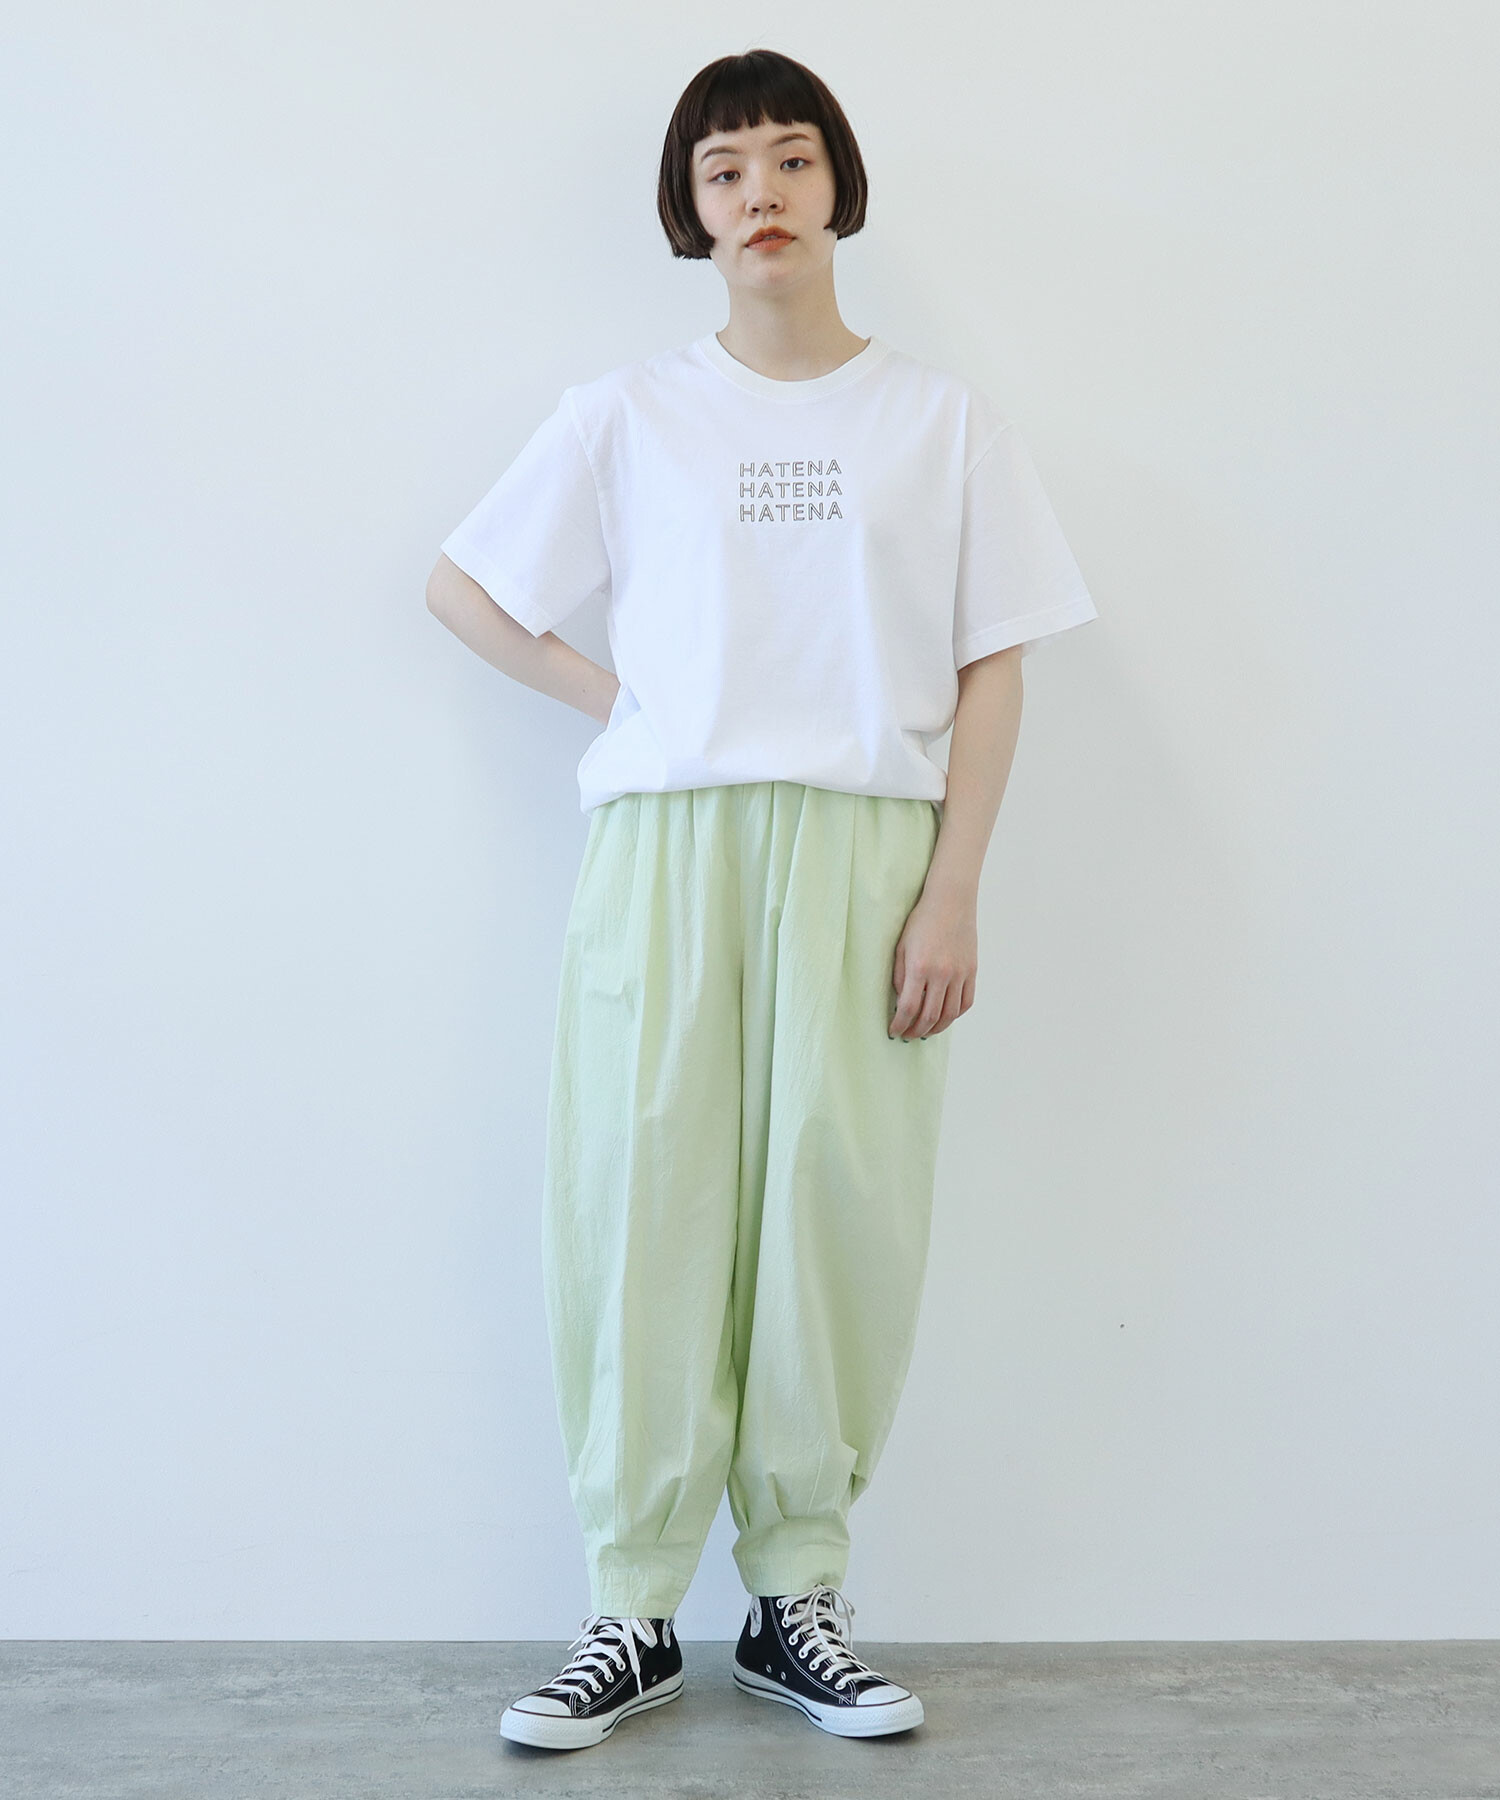 AMBIDEX Store HATENA×OKI KENICHI T-シャツ size1(F ホワイト): FLAT 